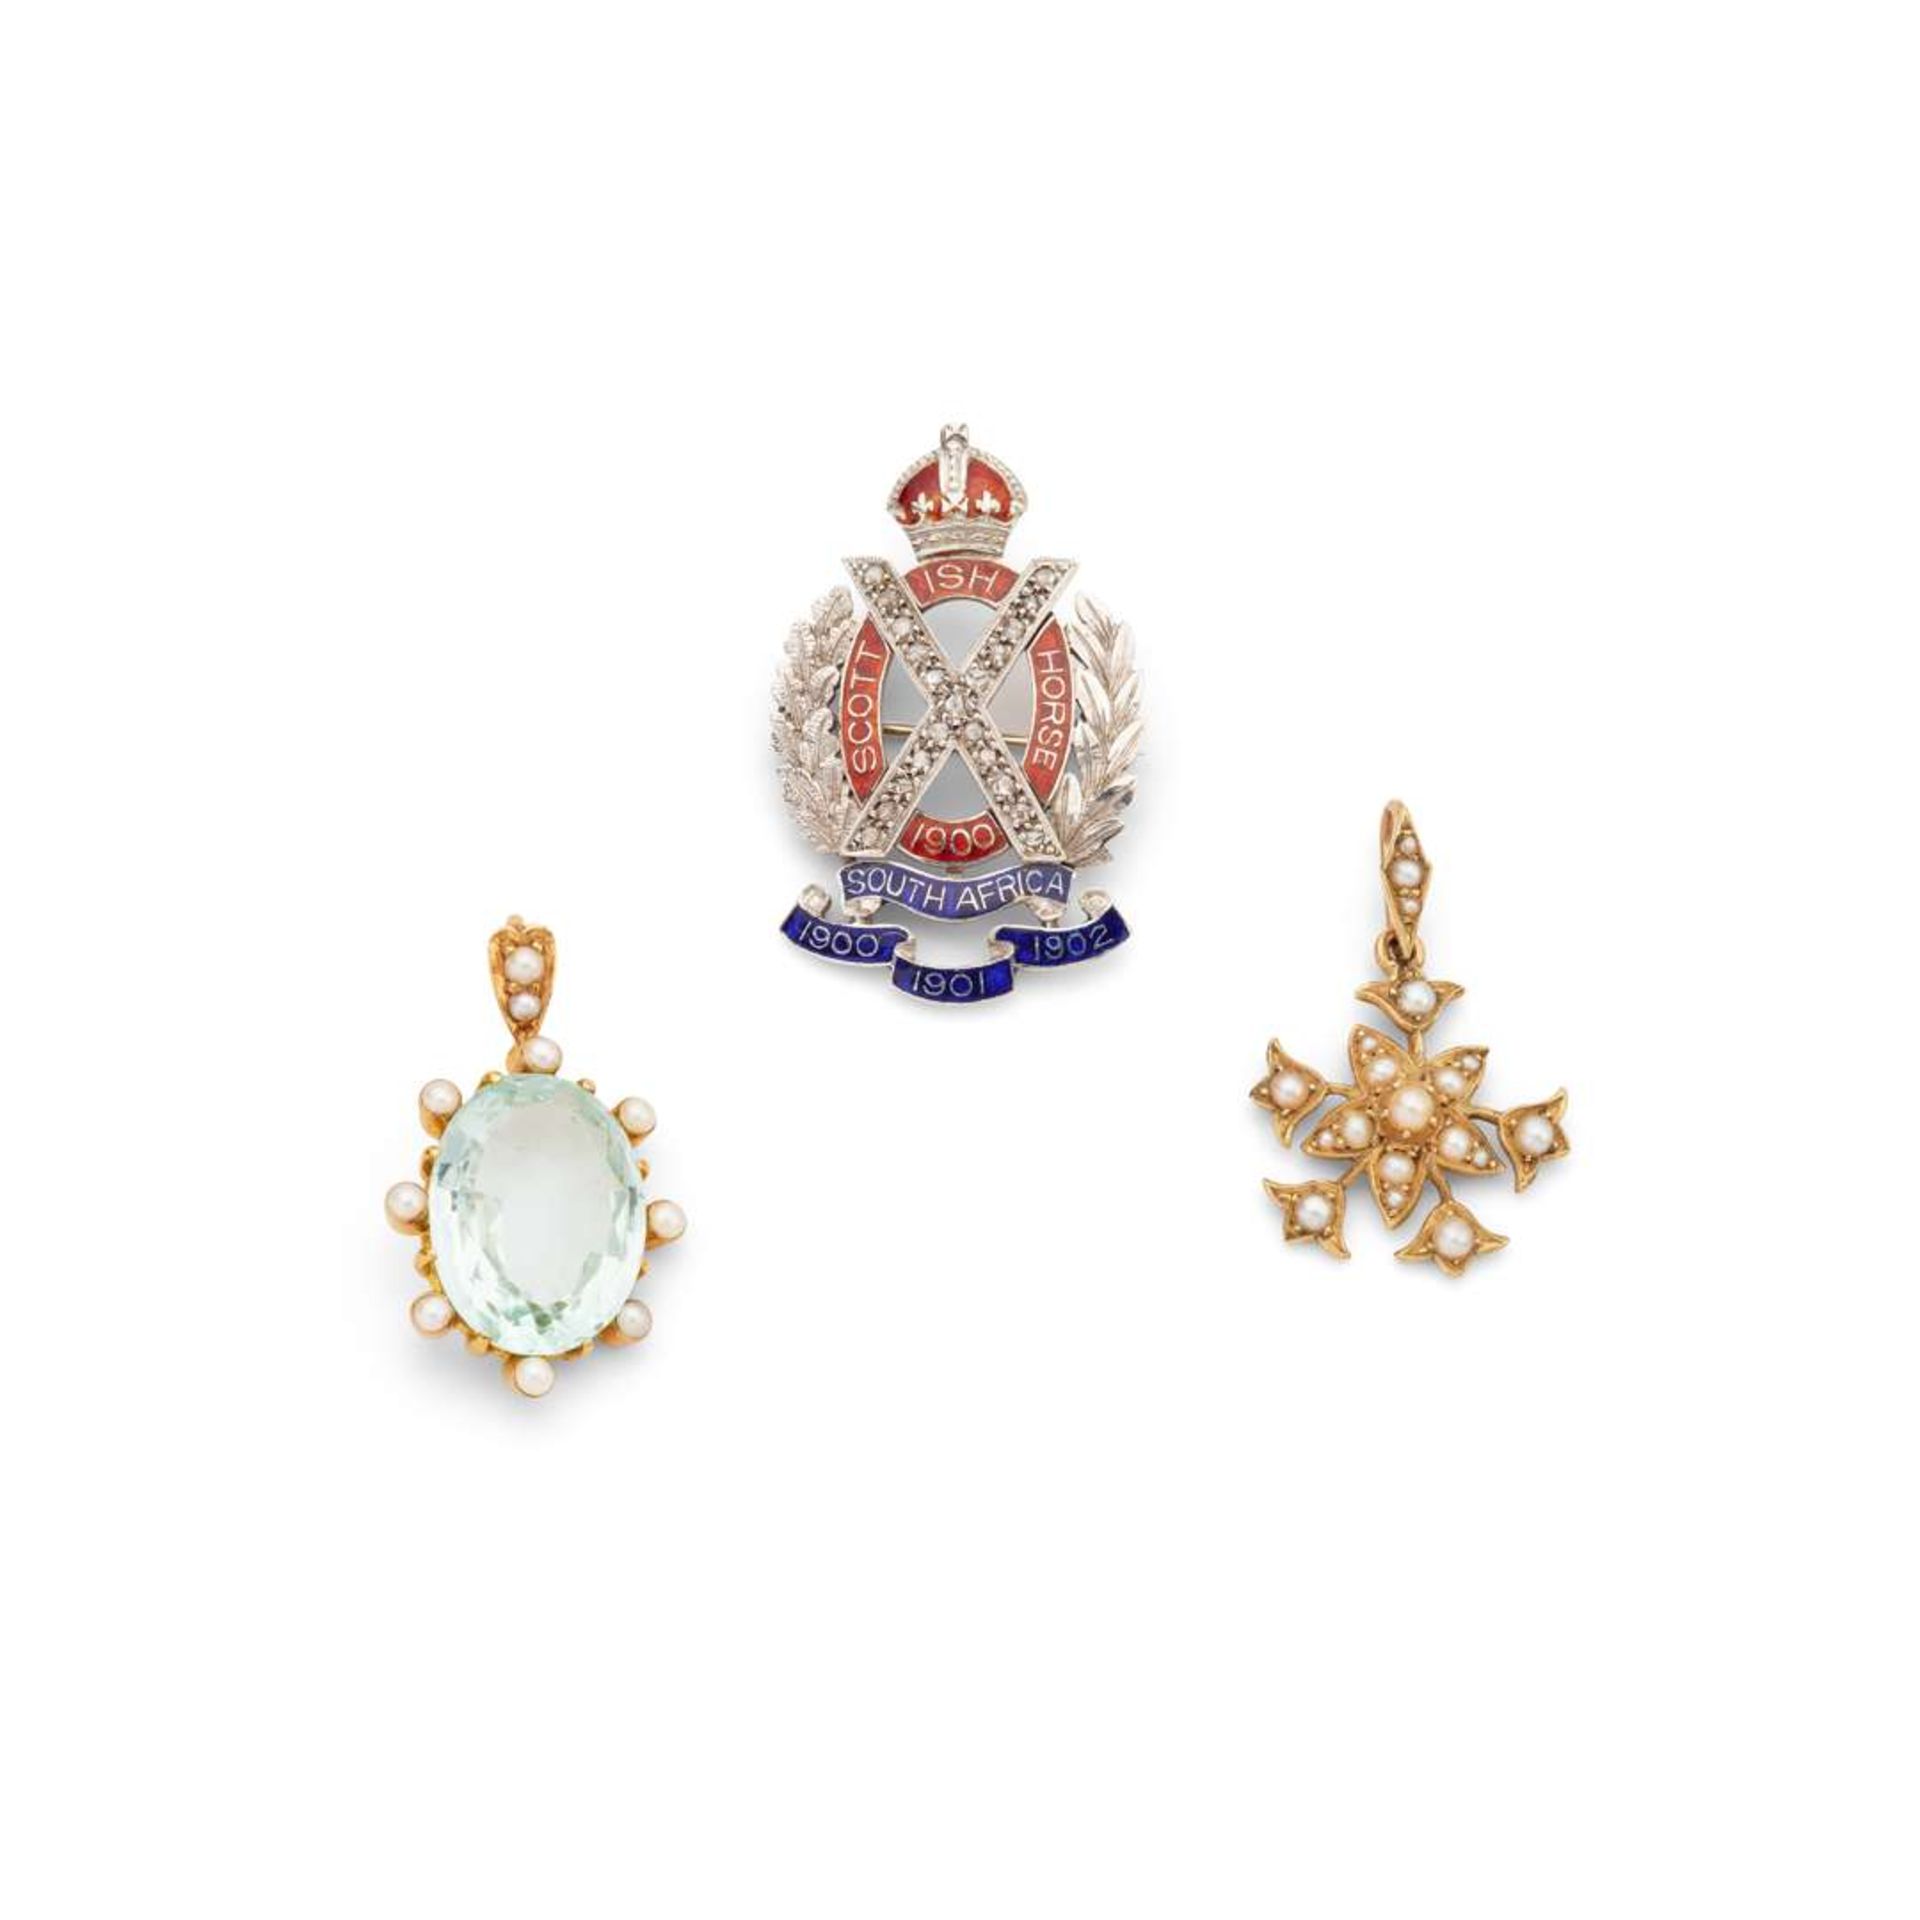 Two early 20th century gem-set pendants